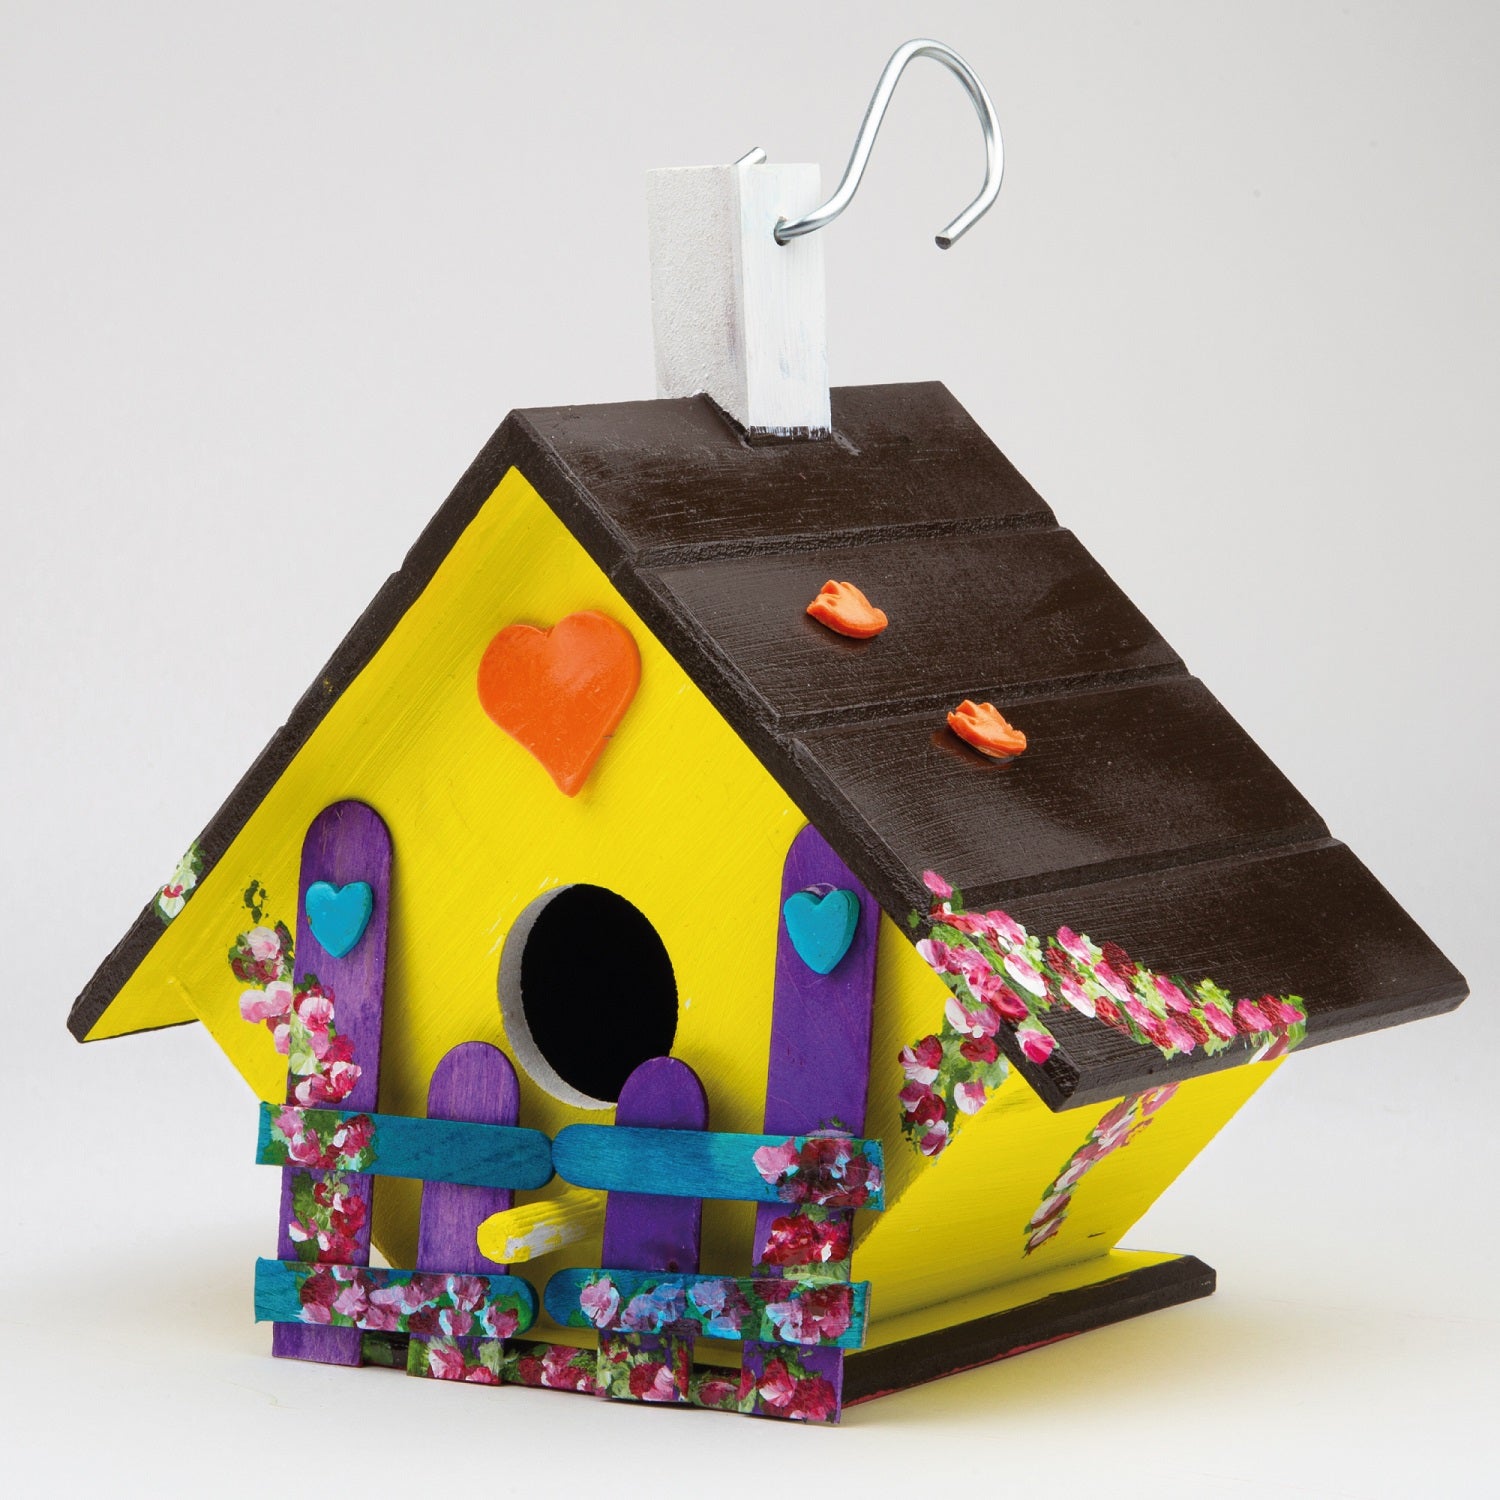 Belmique Bird House - Multicolored - 100% HANDMADE